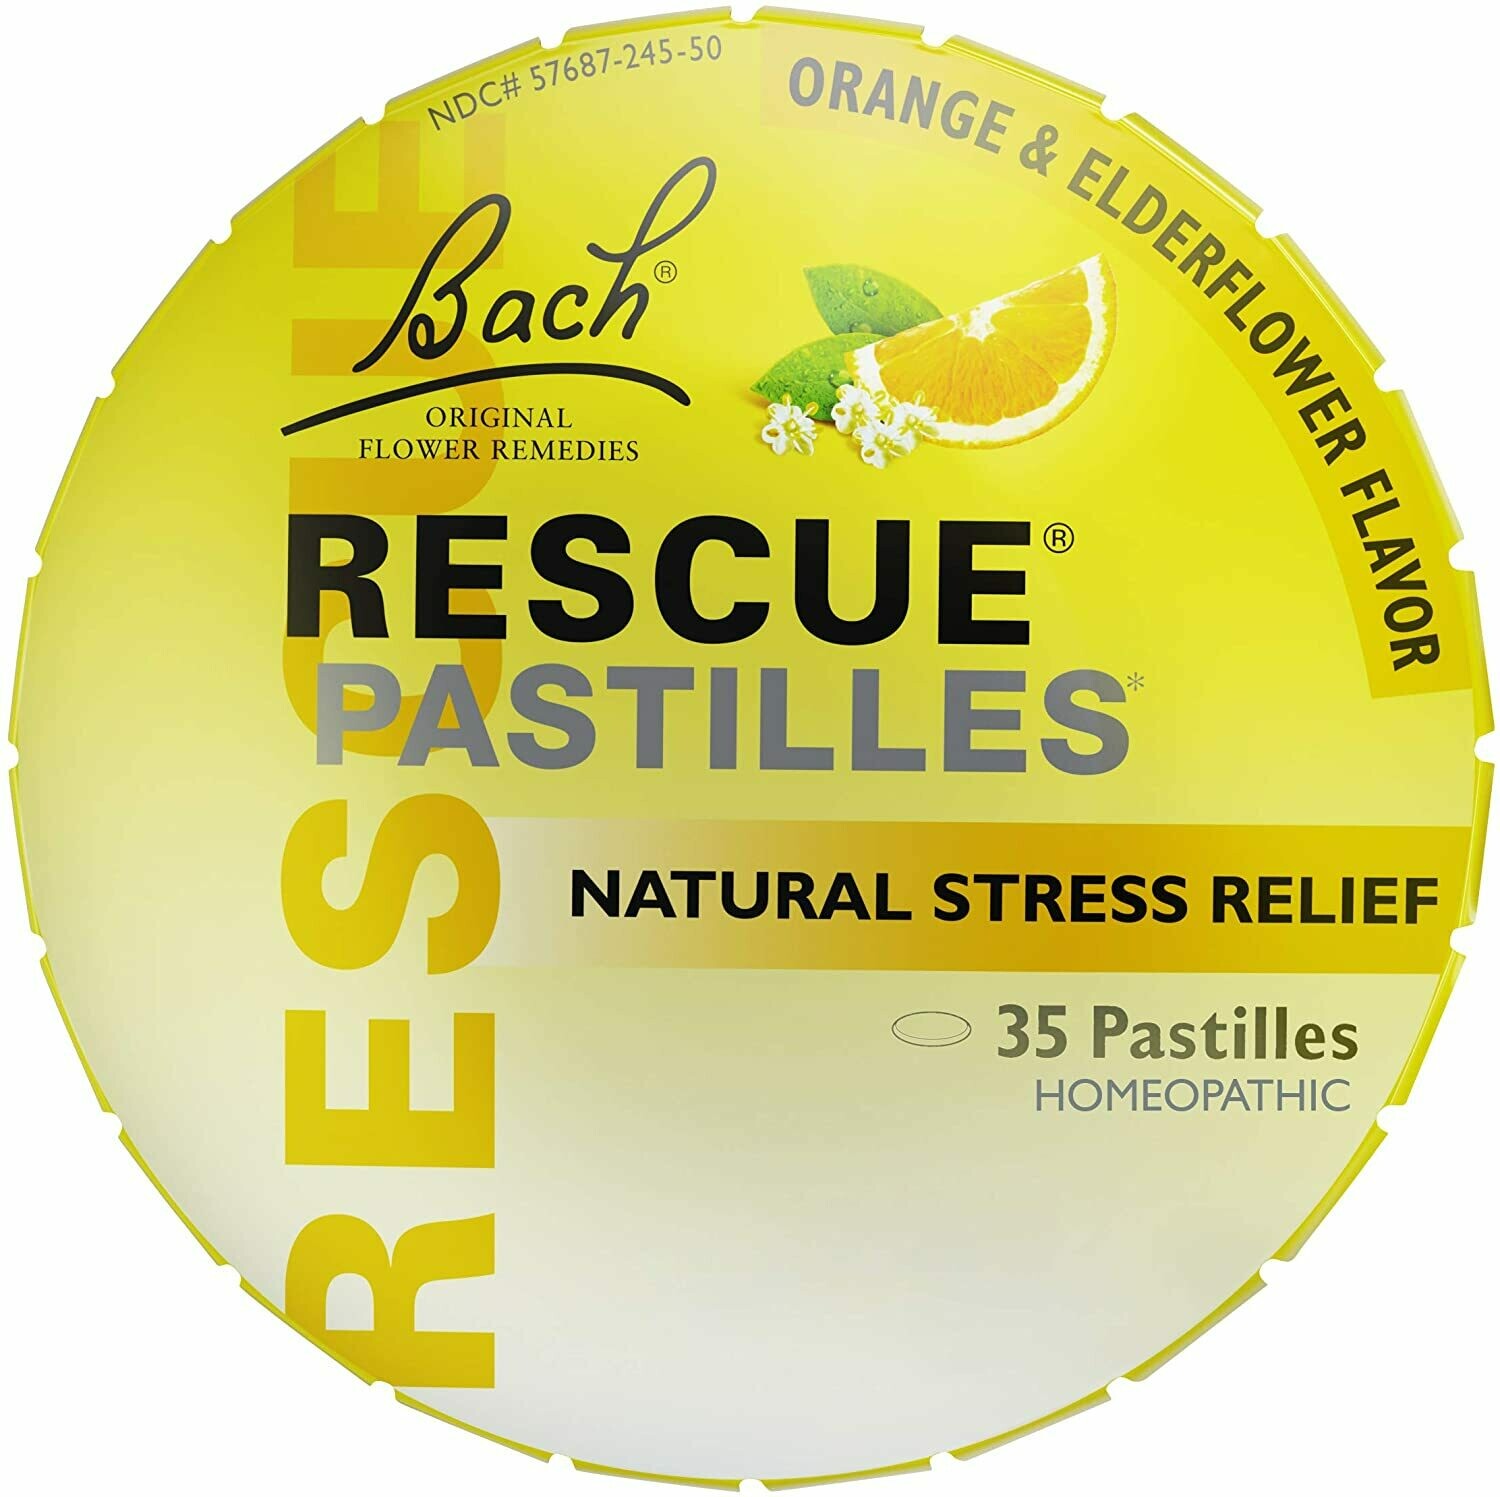 Bach RESCUE PASTILLES, Homeopathic Stress Relief, Natural Orange & Elderflower Flavor - 35 Pastilles